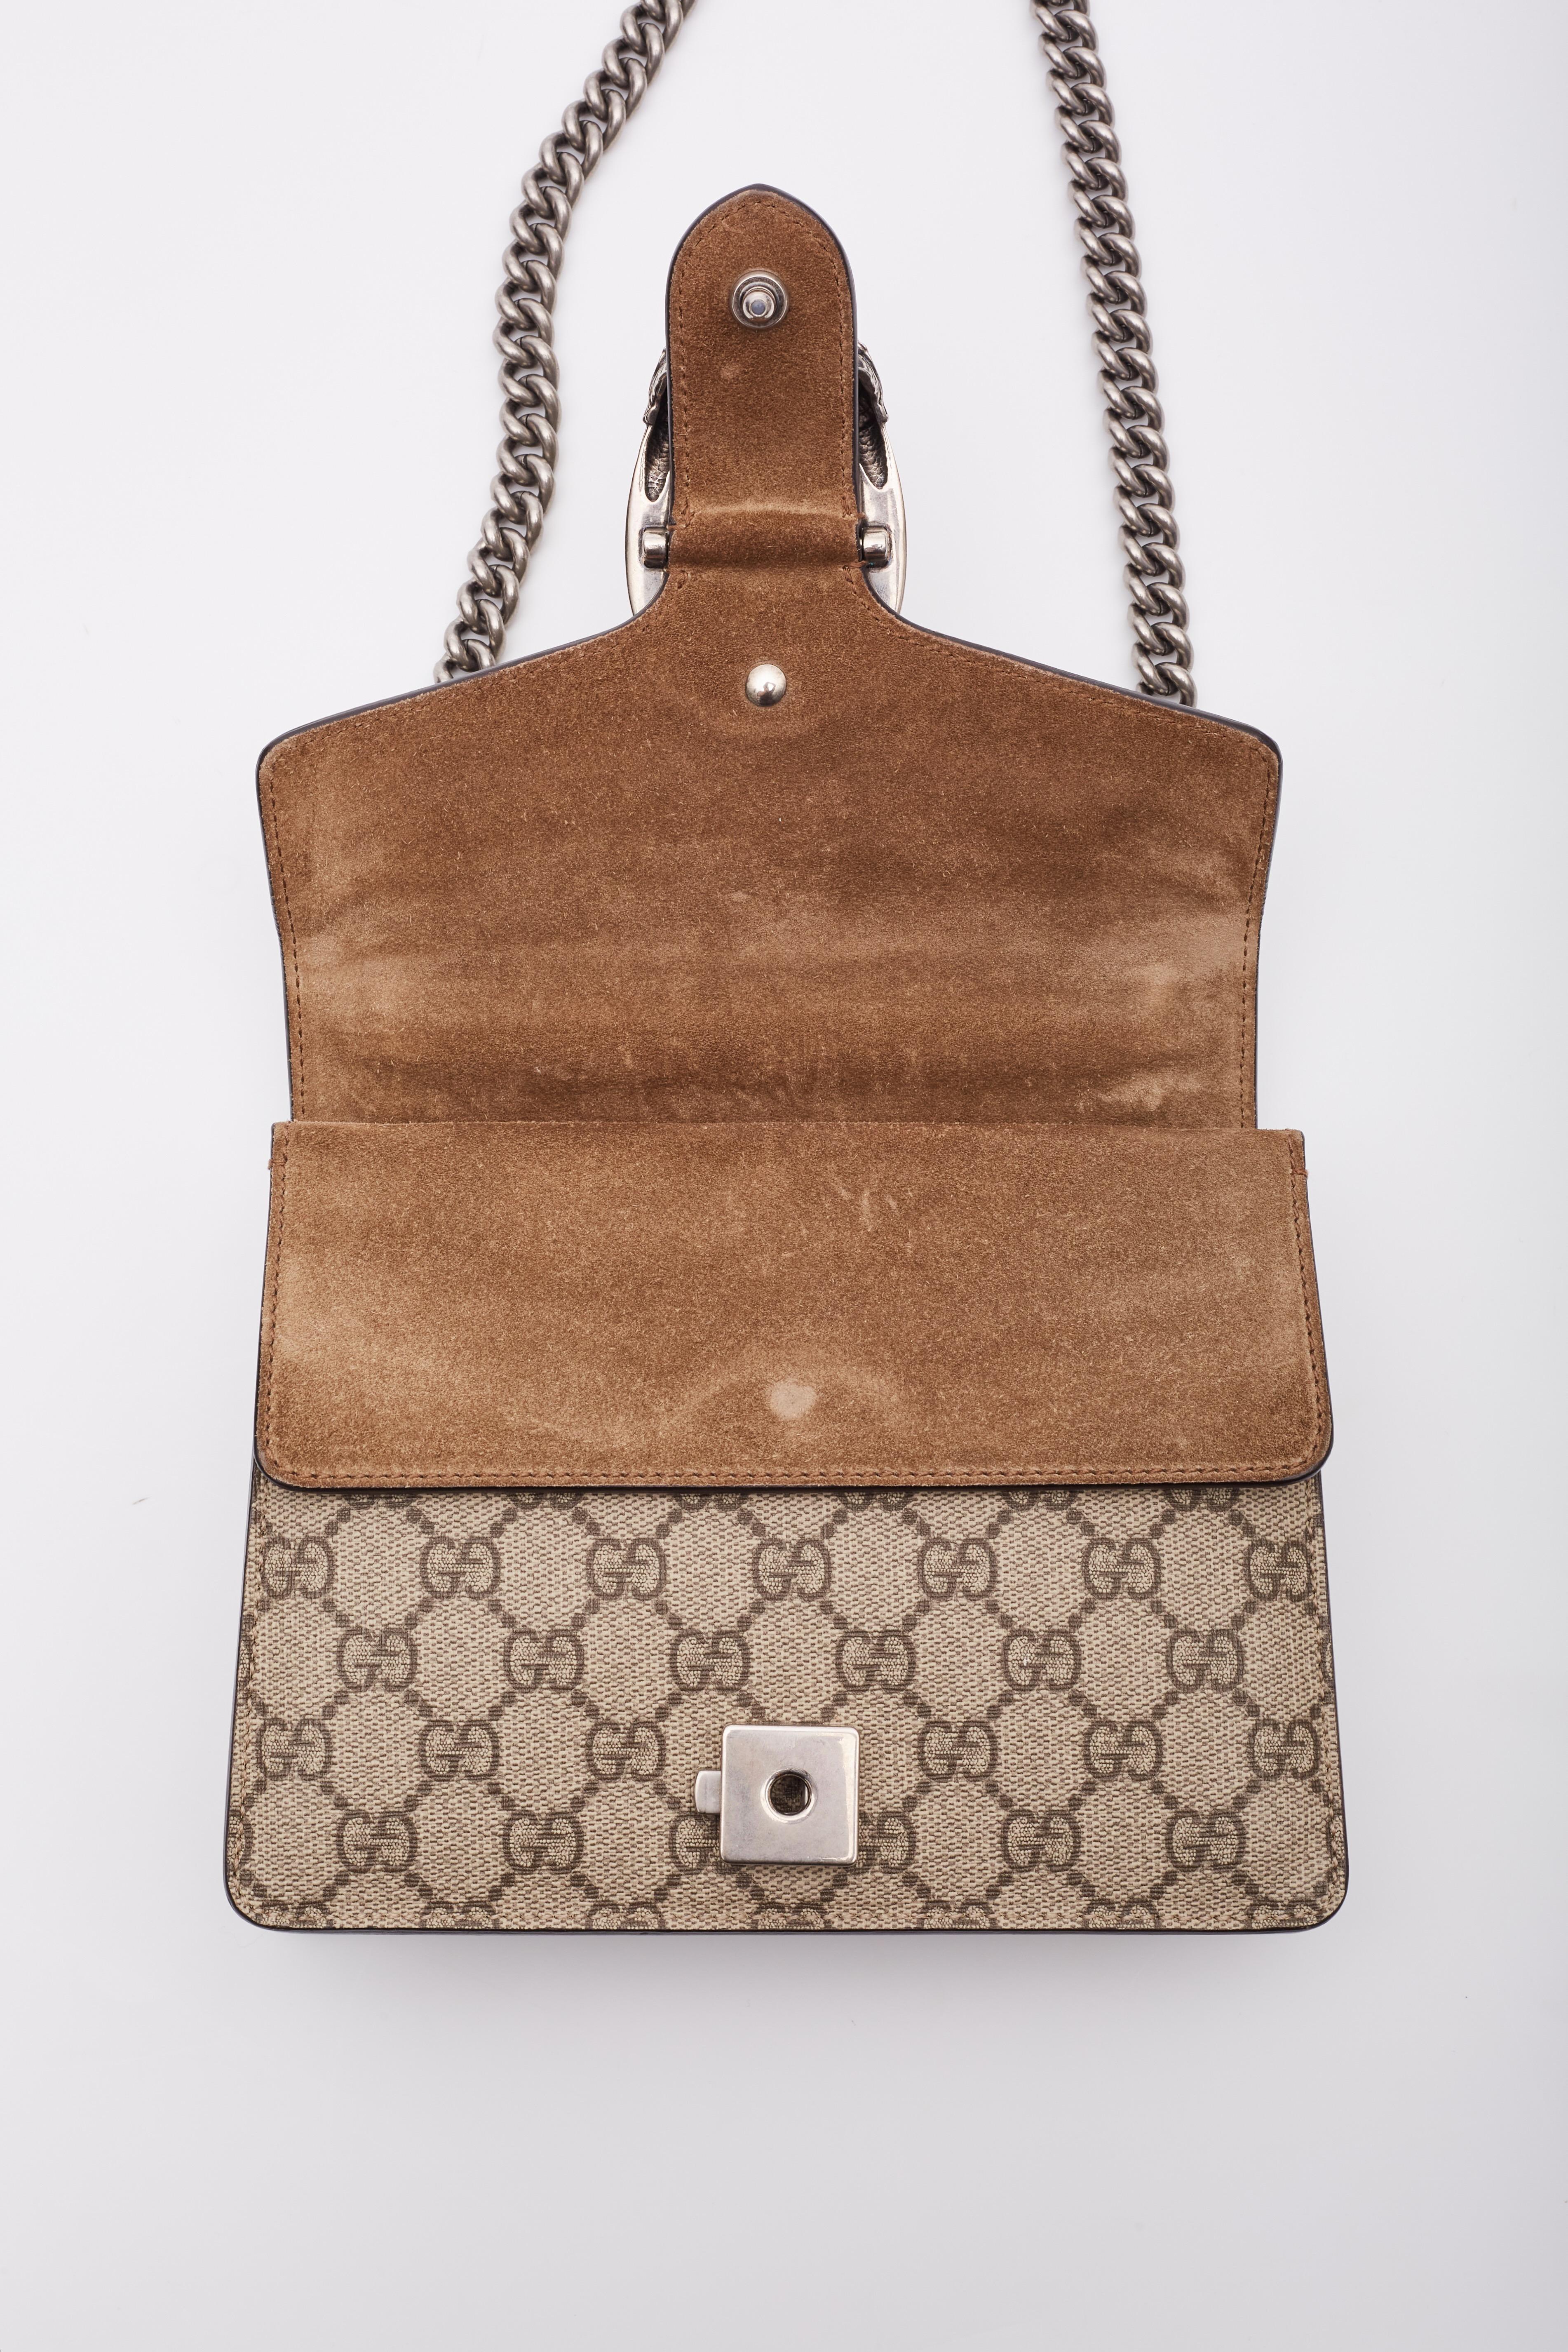 Gucci GG Supreme Ebony Monogram Dionysus Mini Bag (421970) For Sale 5